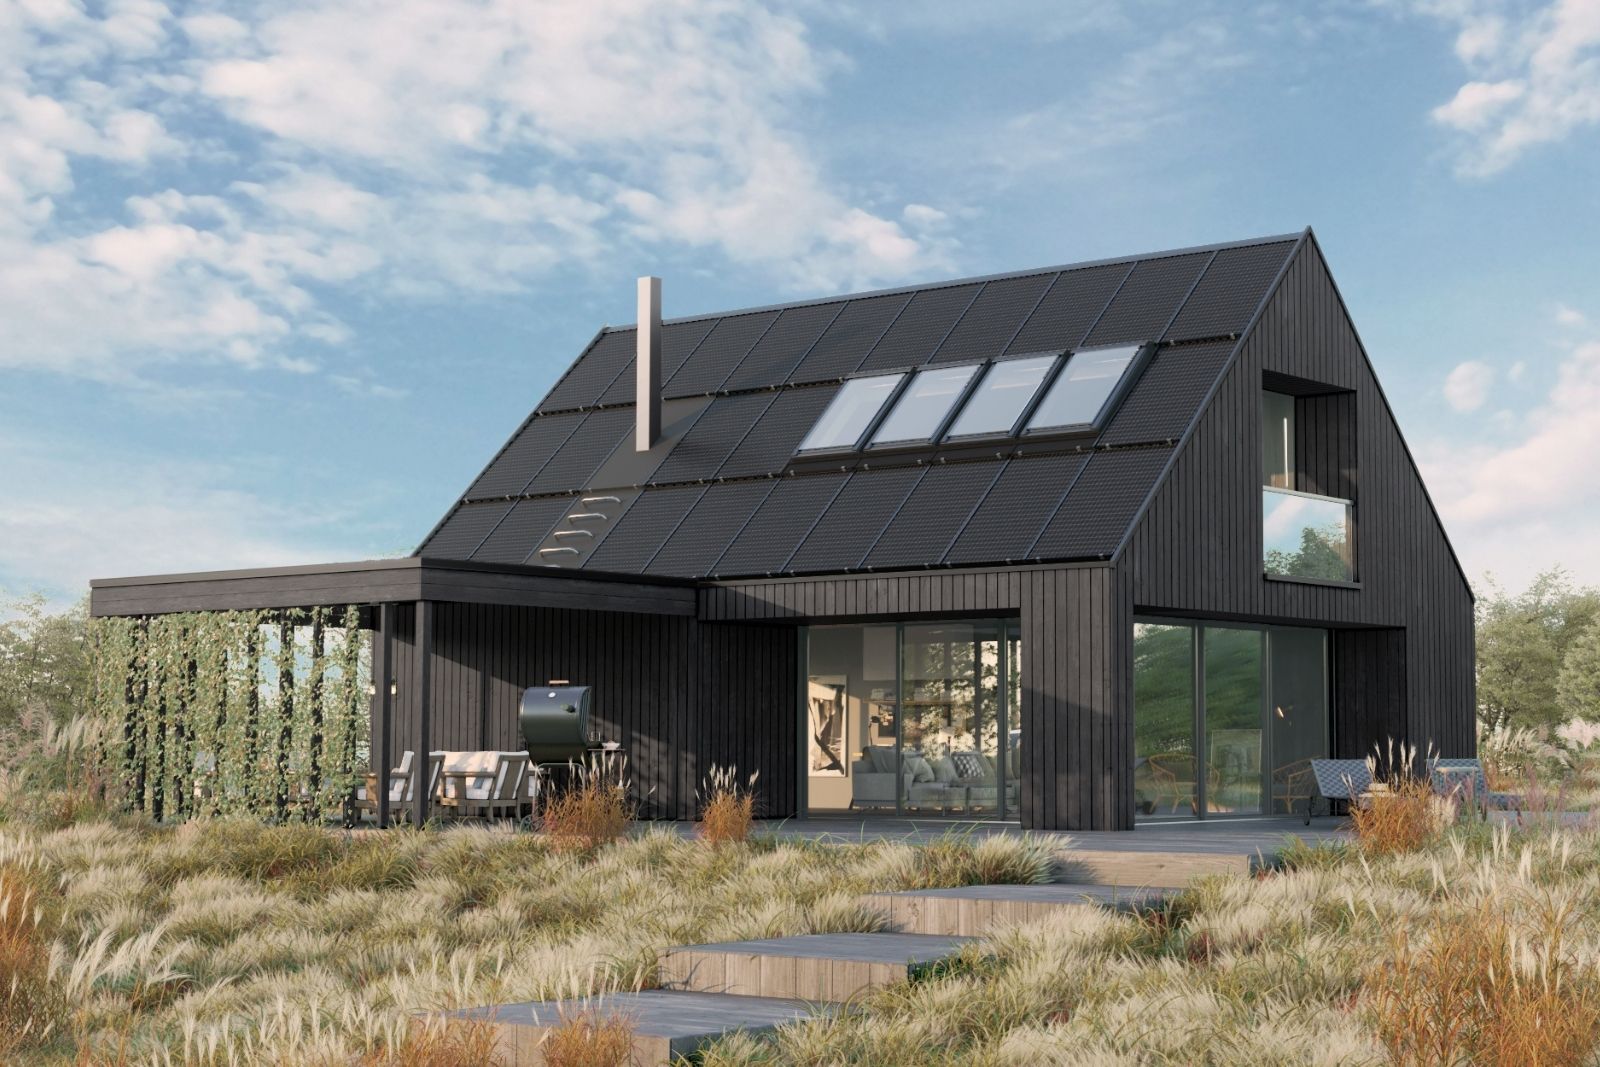 Solar roofing manufacturer Solarstone raises €10 million